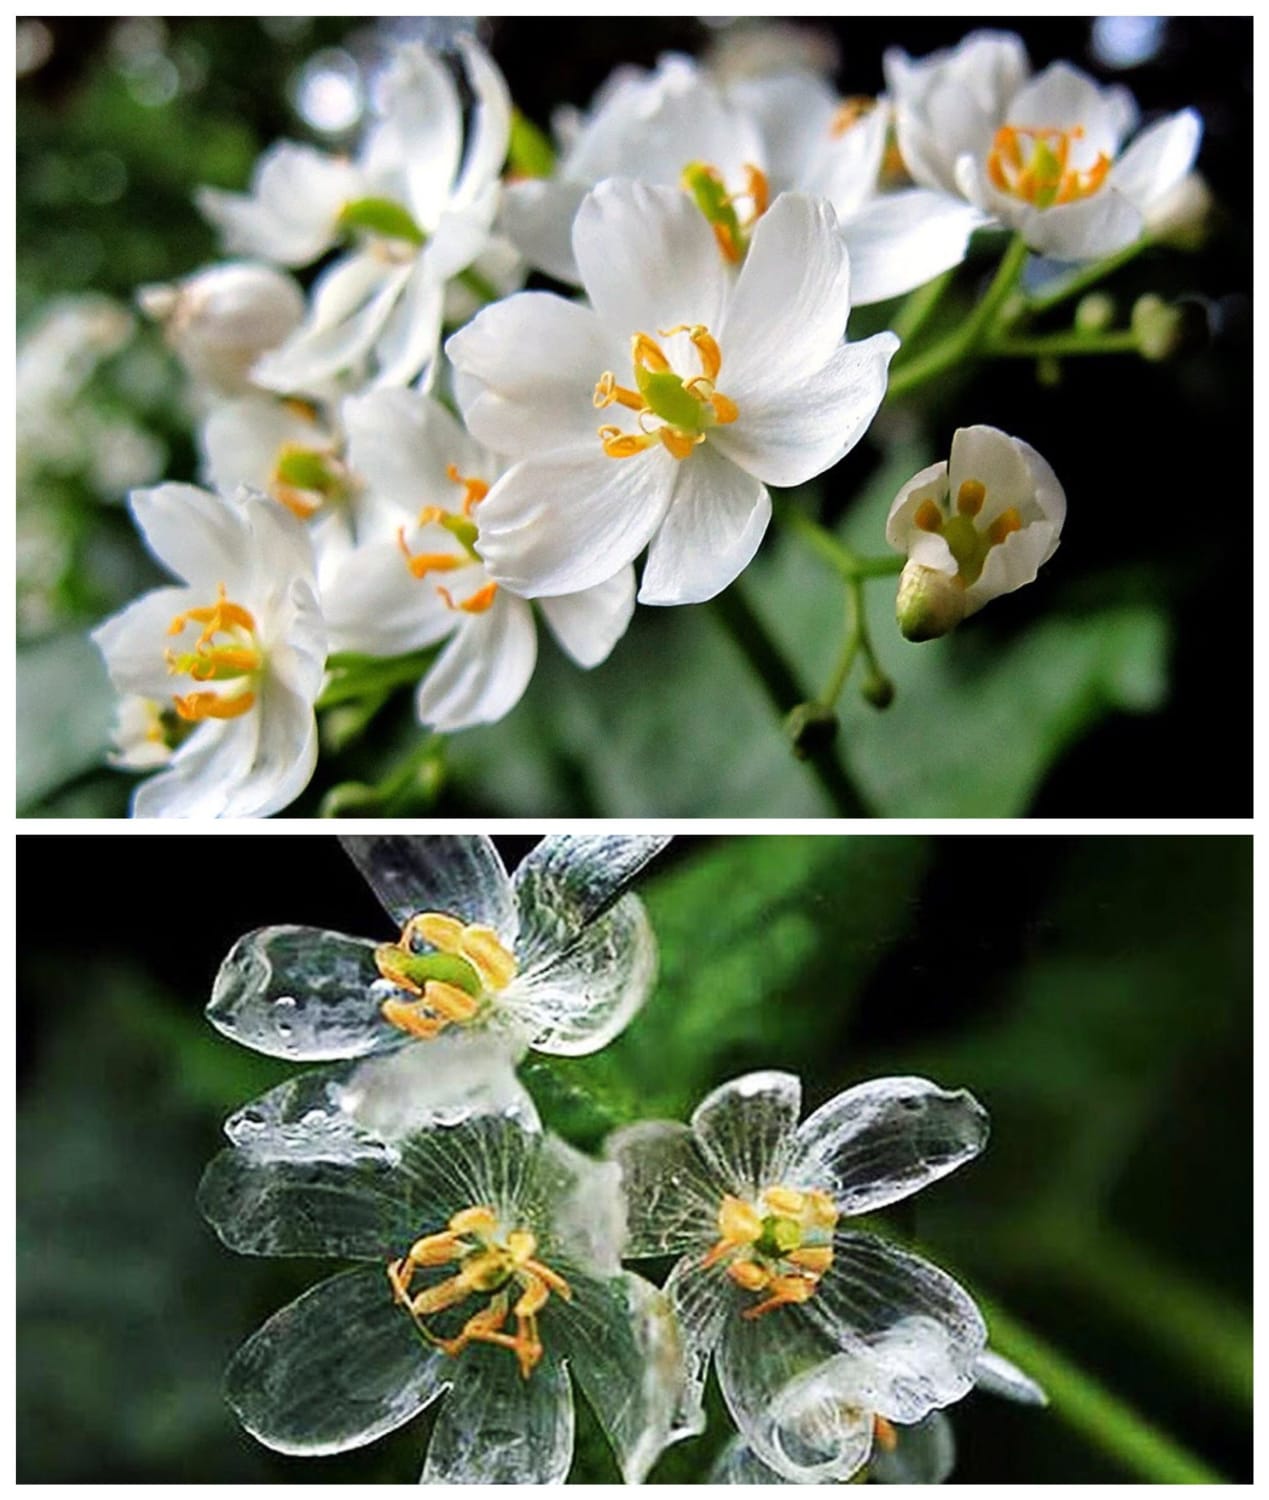 Skeleton flower petals become transparent during rain